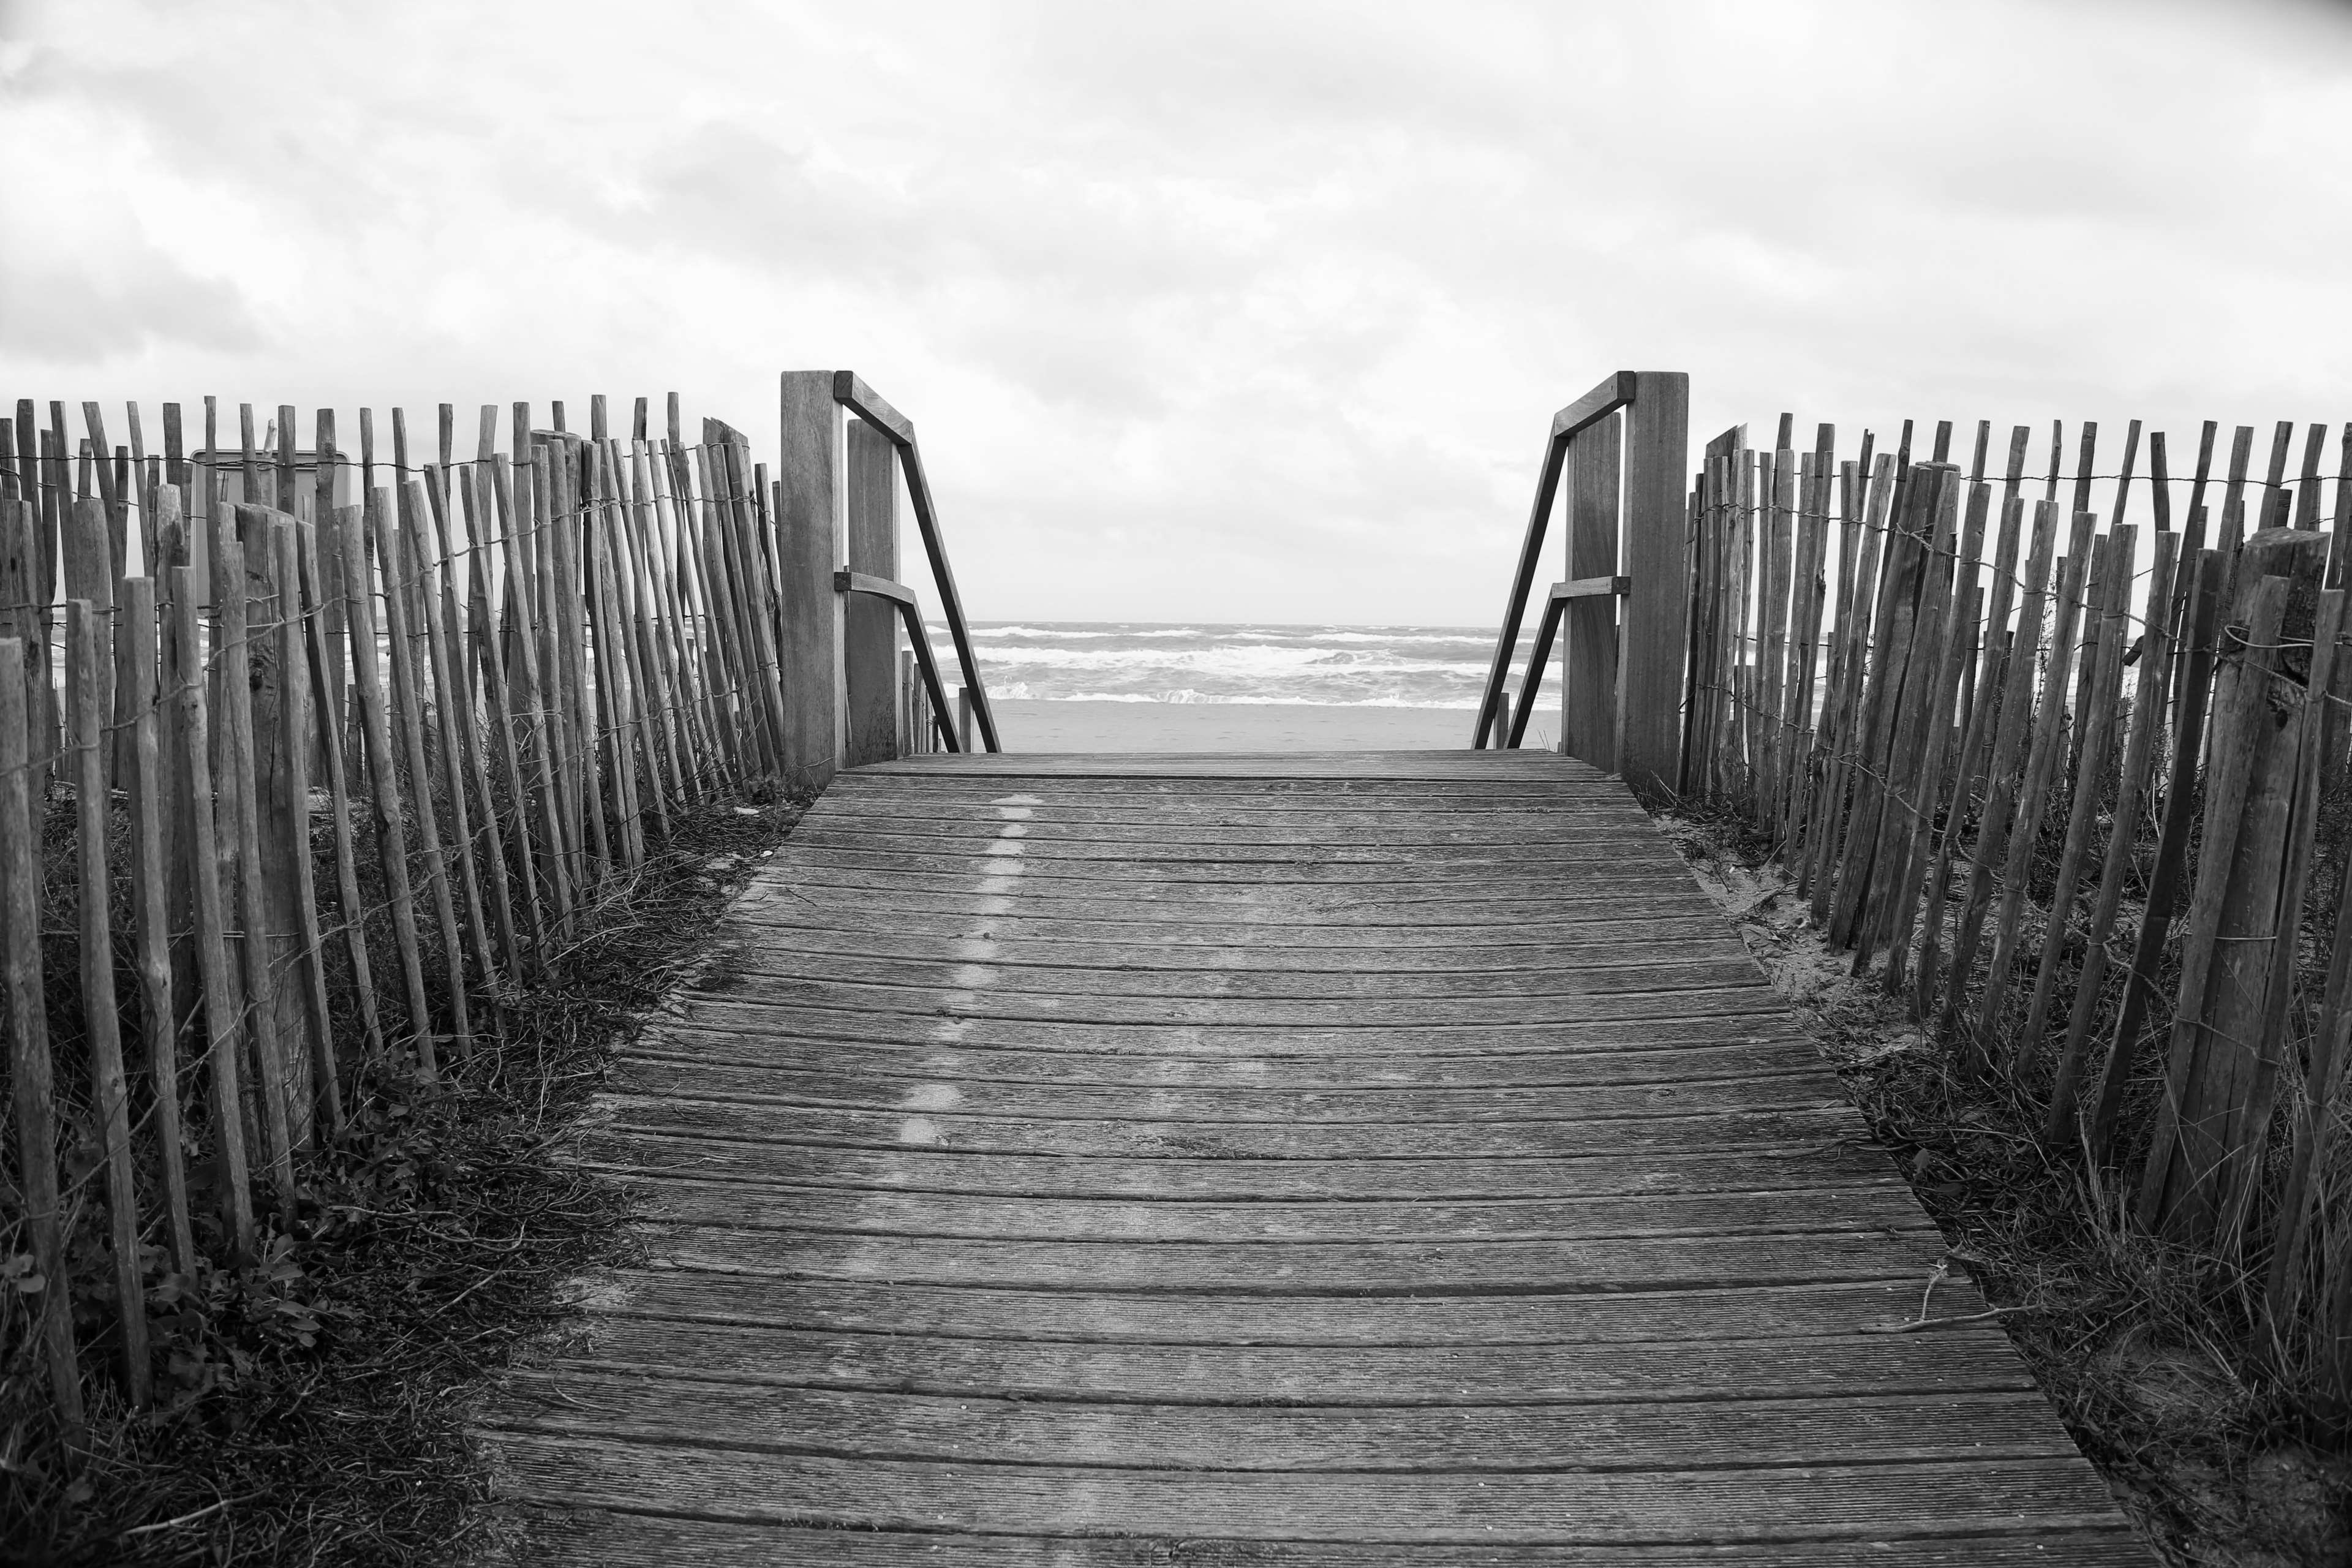 beach, black and white, boardwalk, bridge, dawn, dock, dusk, fence